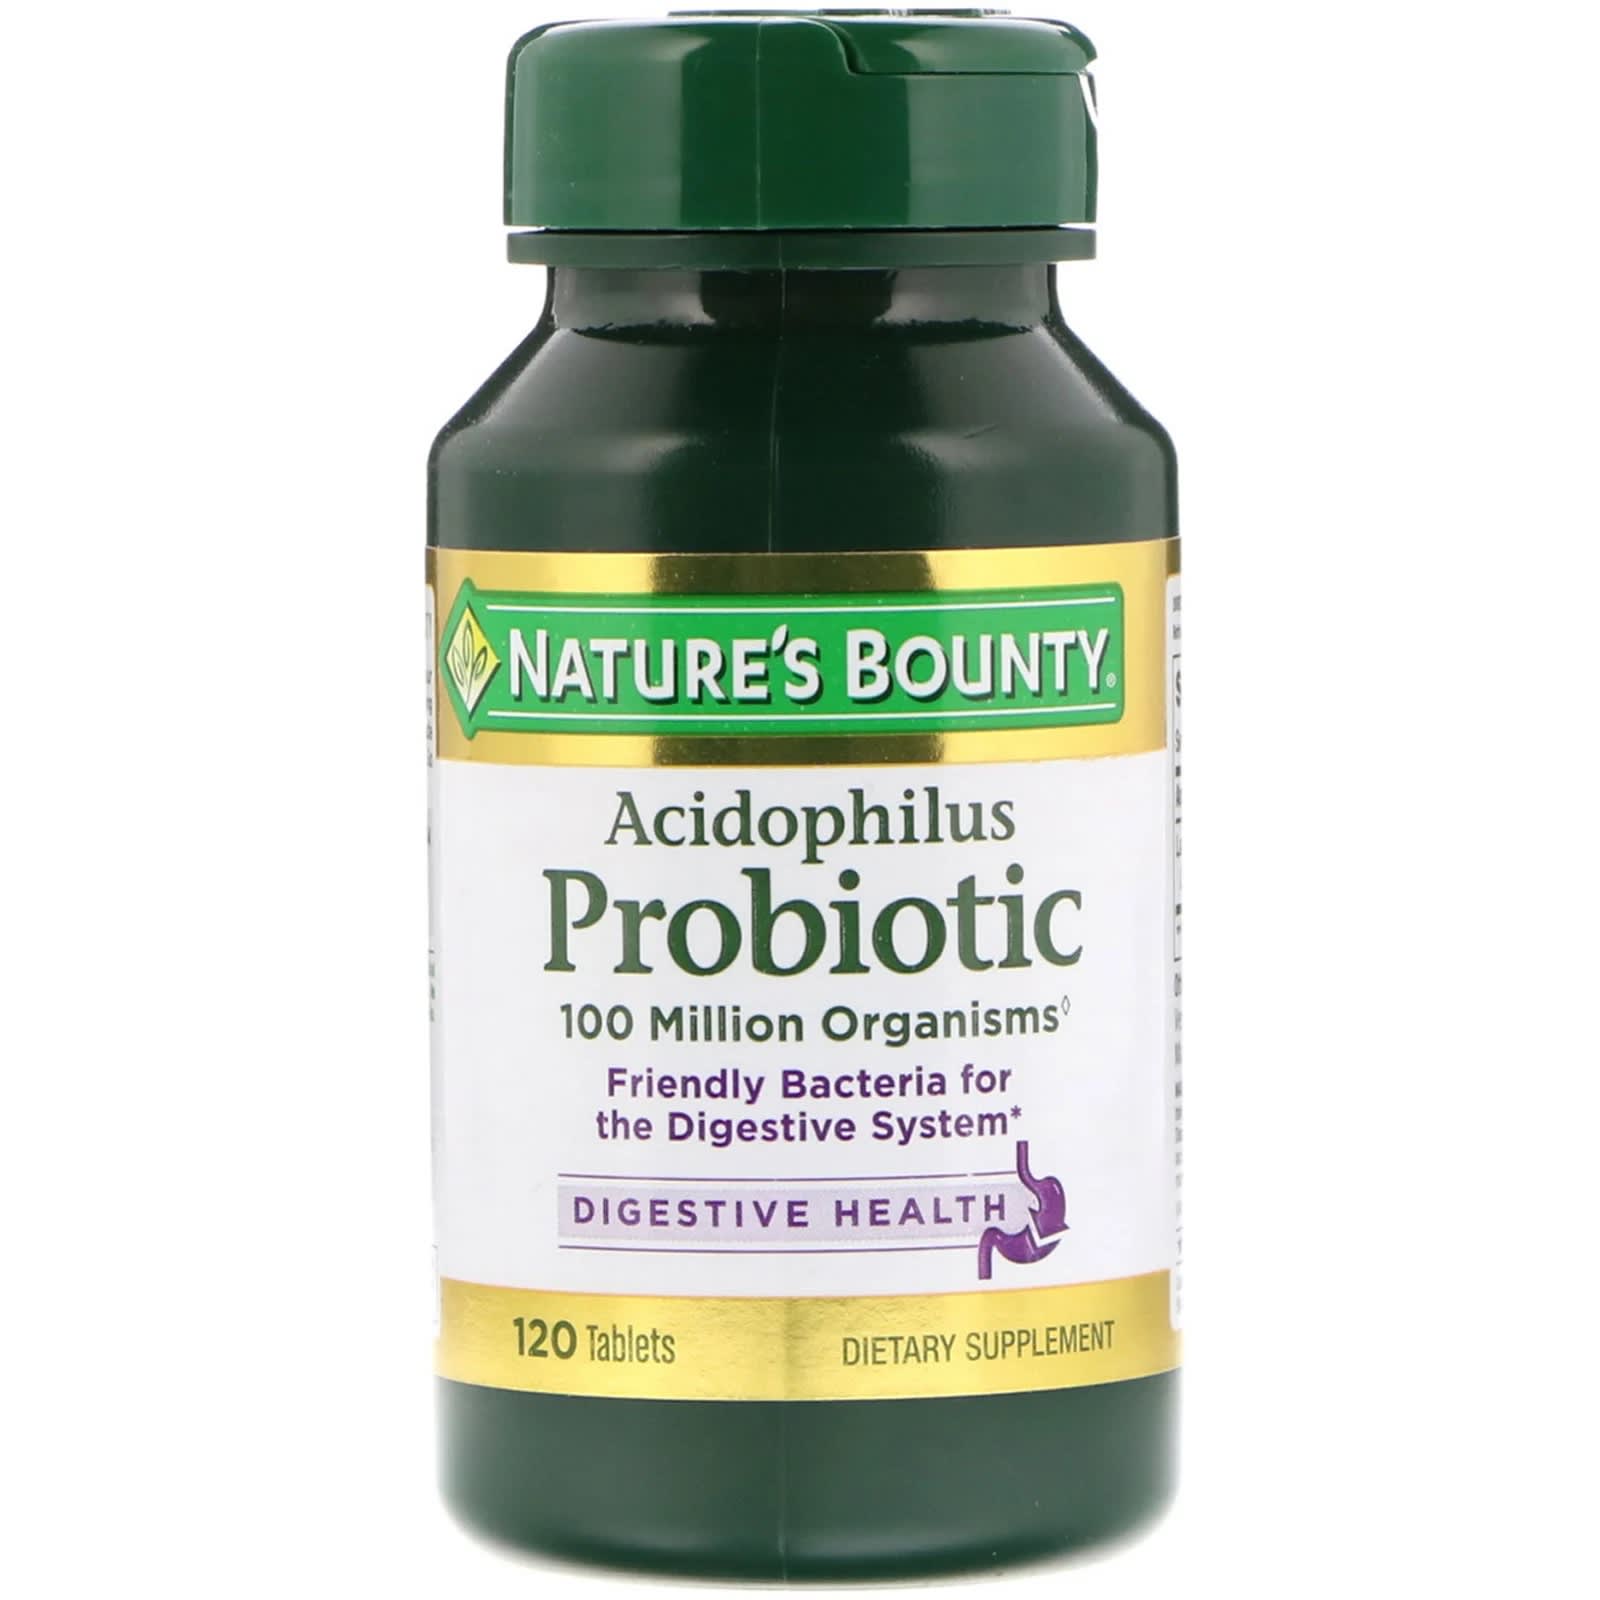 Nature's Bounty Acidophilus Probiotic, Digestive Health